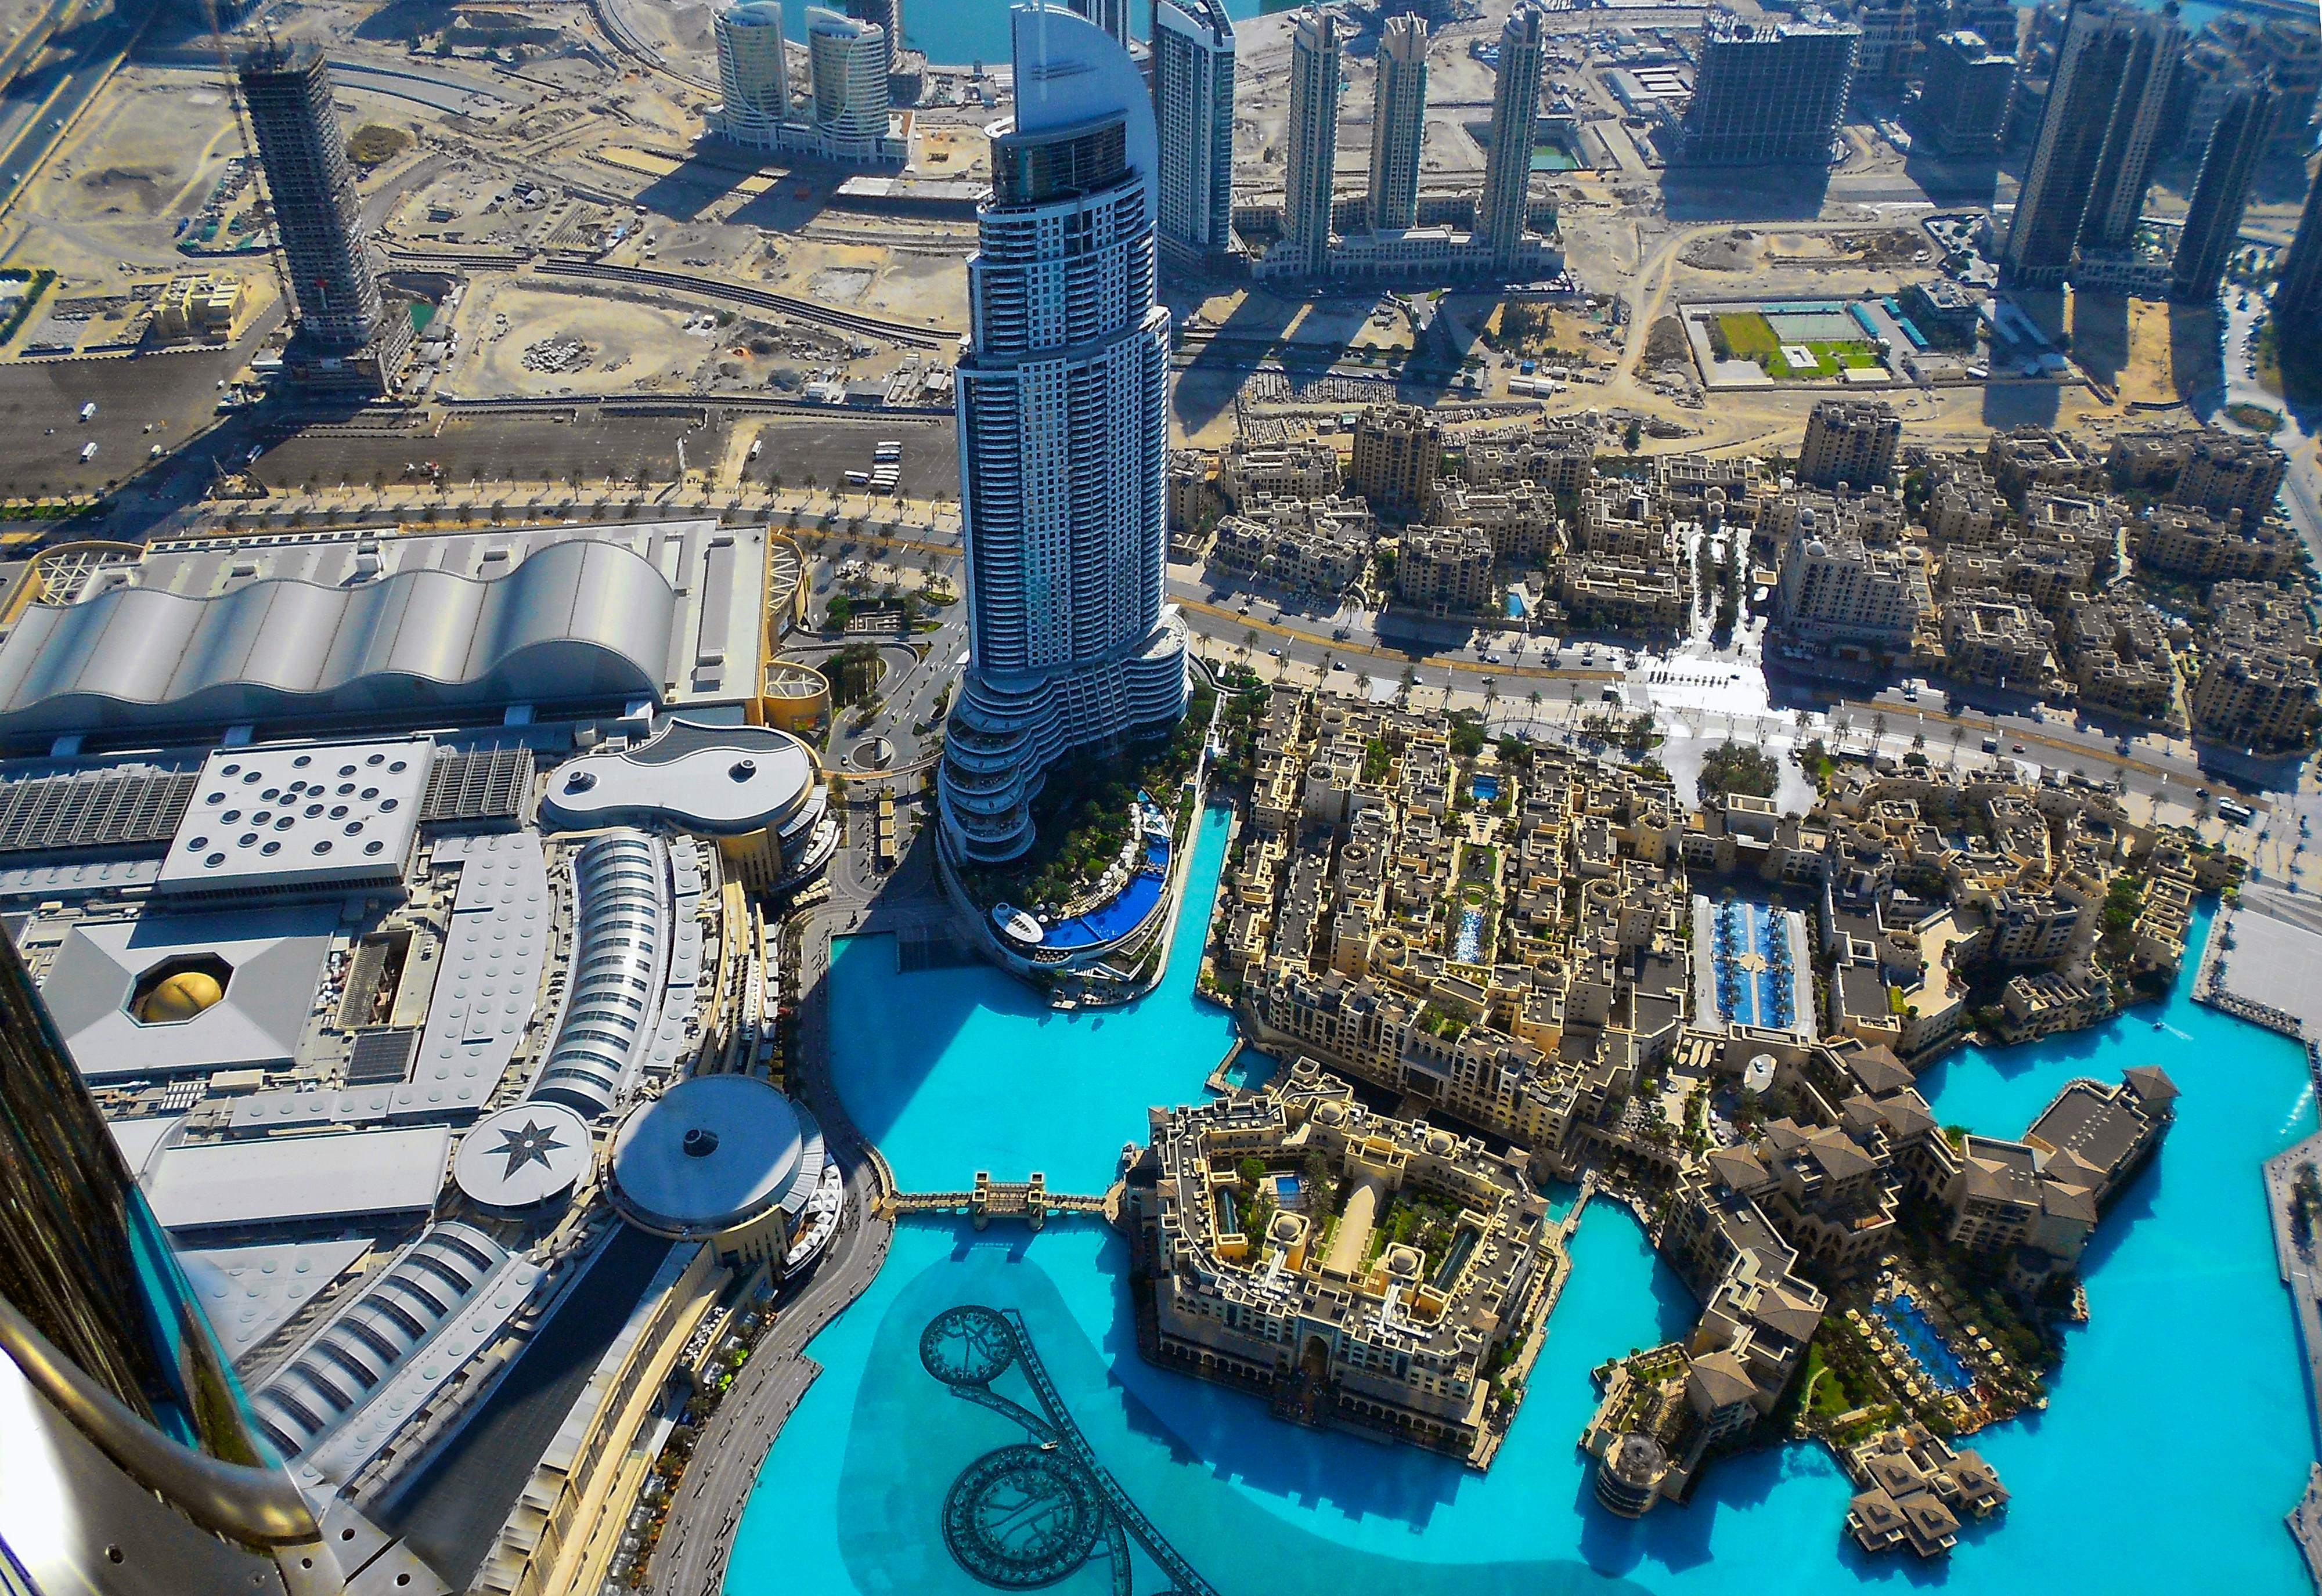 Half Day Dubai City Tour & Explore Dubai Mall – Attractions Include the Dubai Aquarium, Burj Khalifa (Non-prime Hours), Dubai Fountain Show & Underwater Zoo